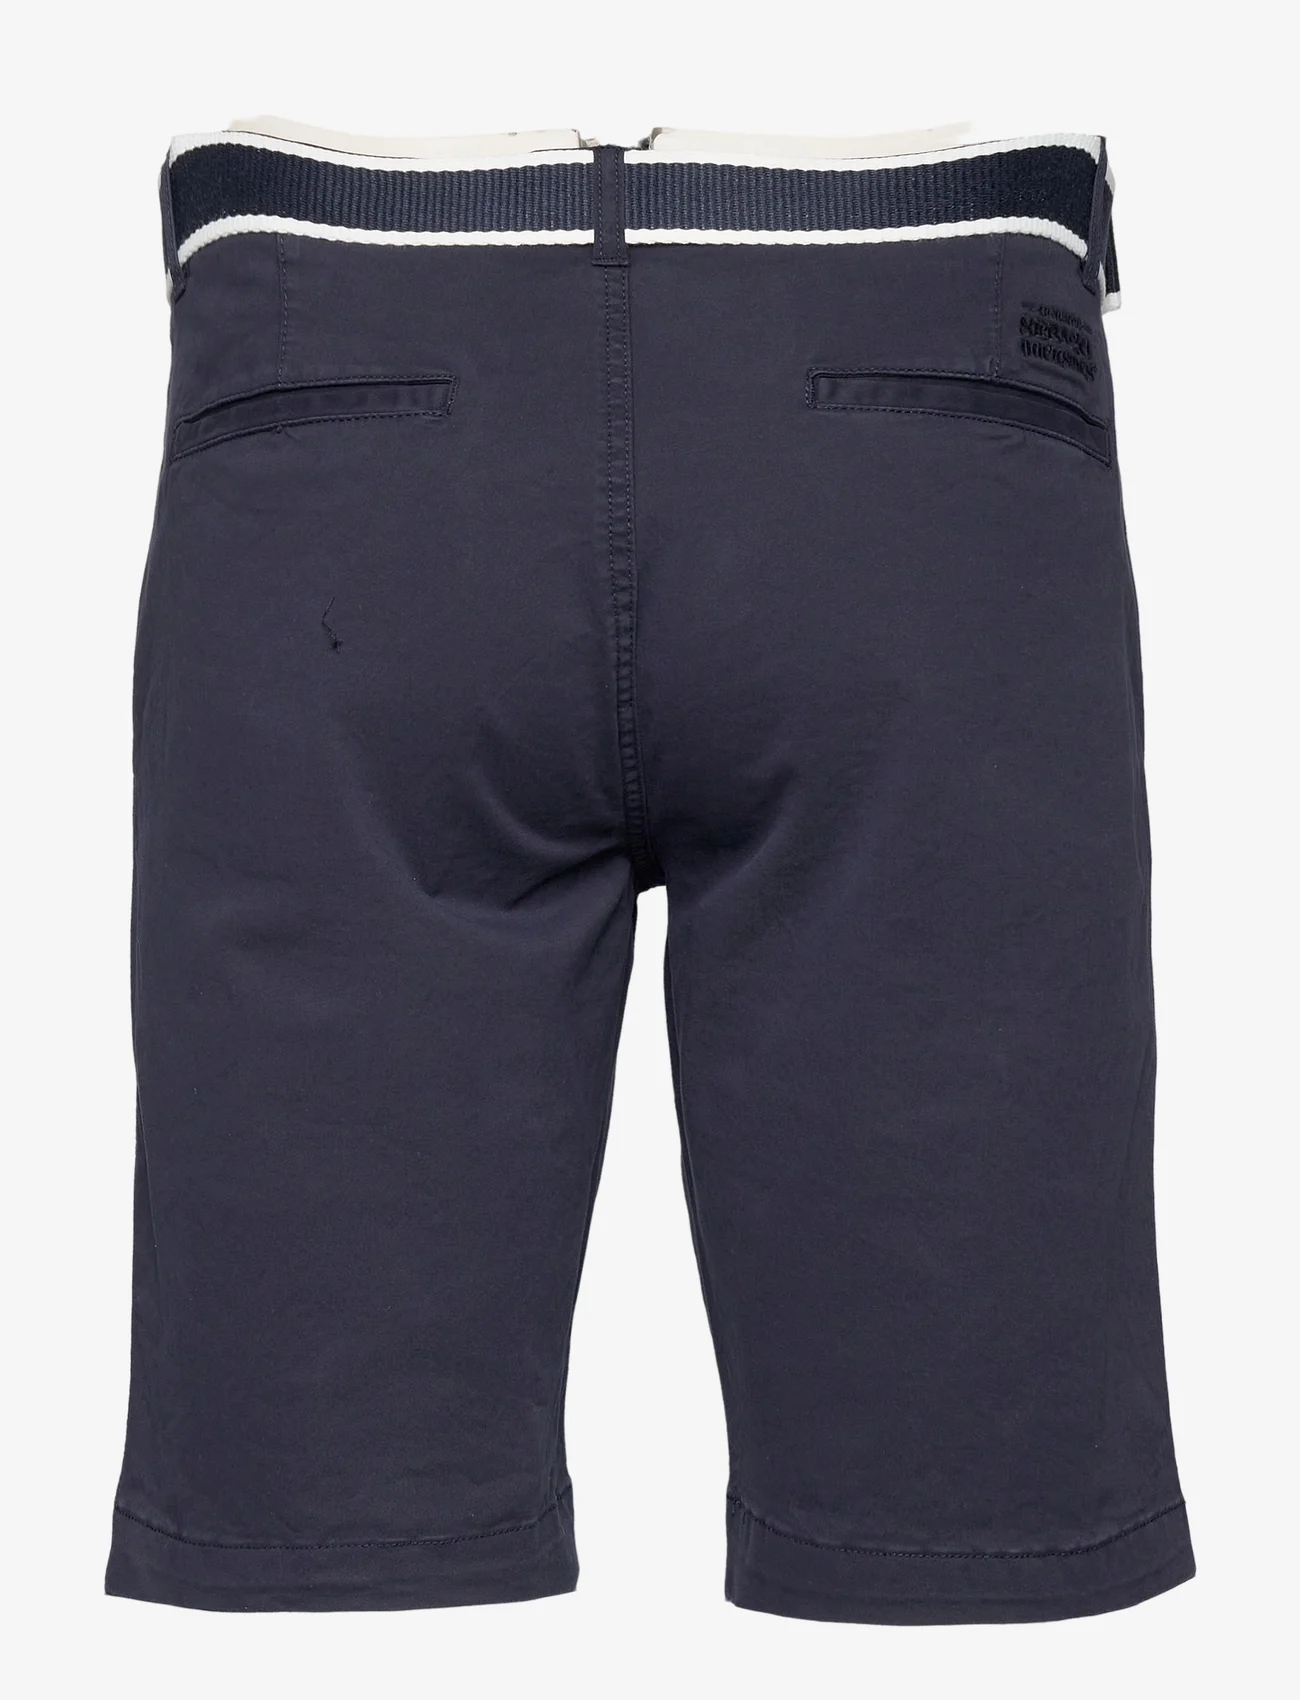 Sebago - DKS Belted Bermuda Shorts - chinos shorts - dark navy - 1